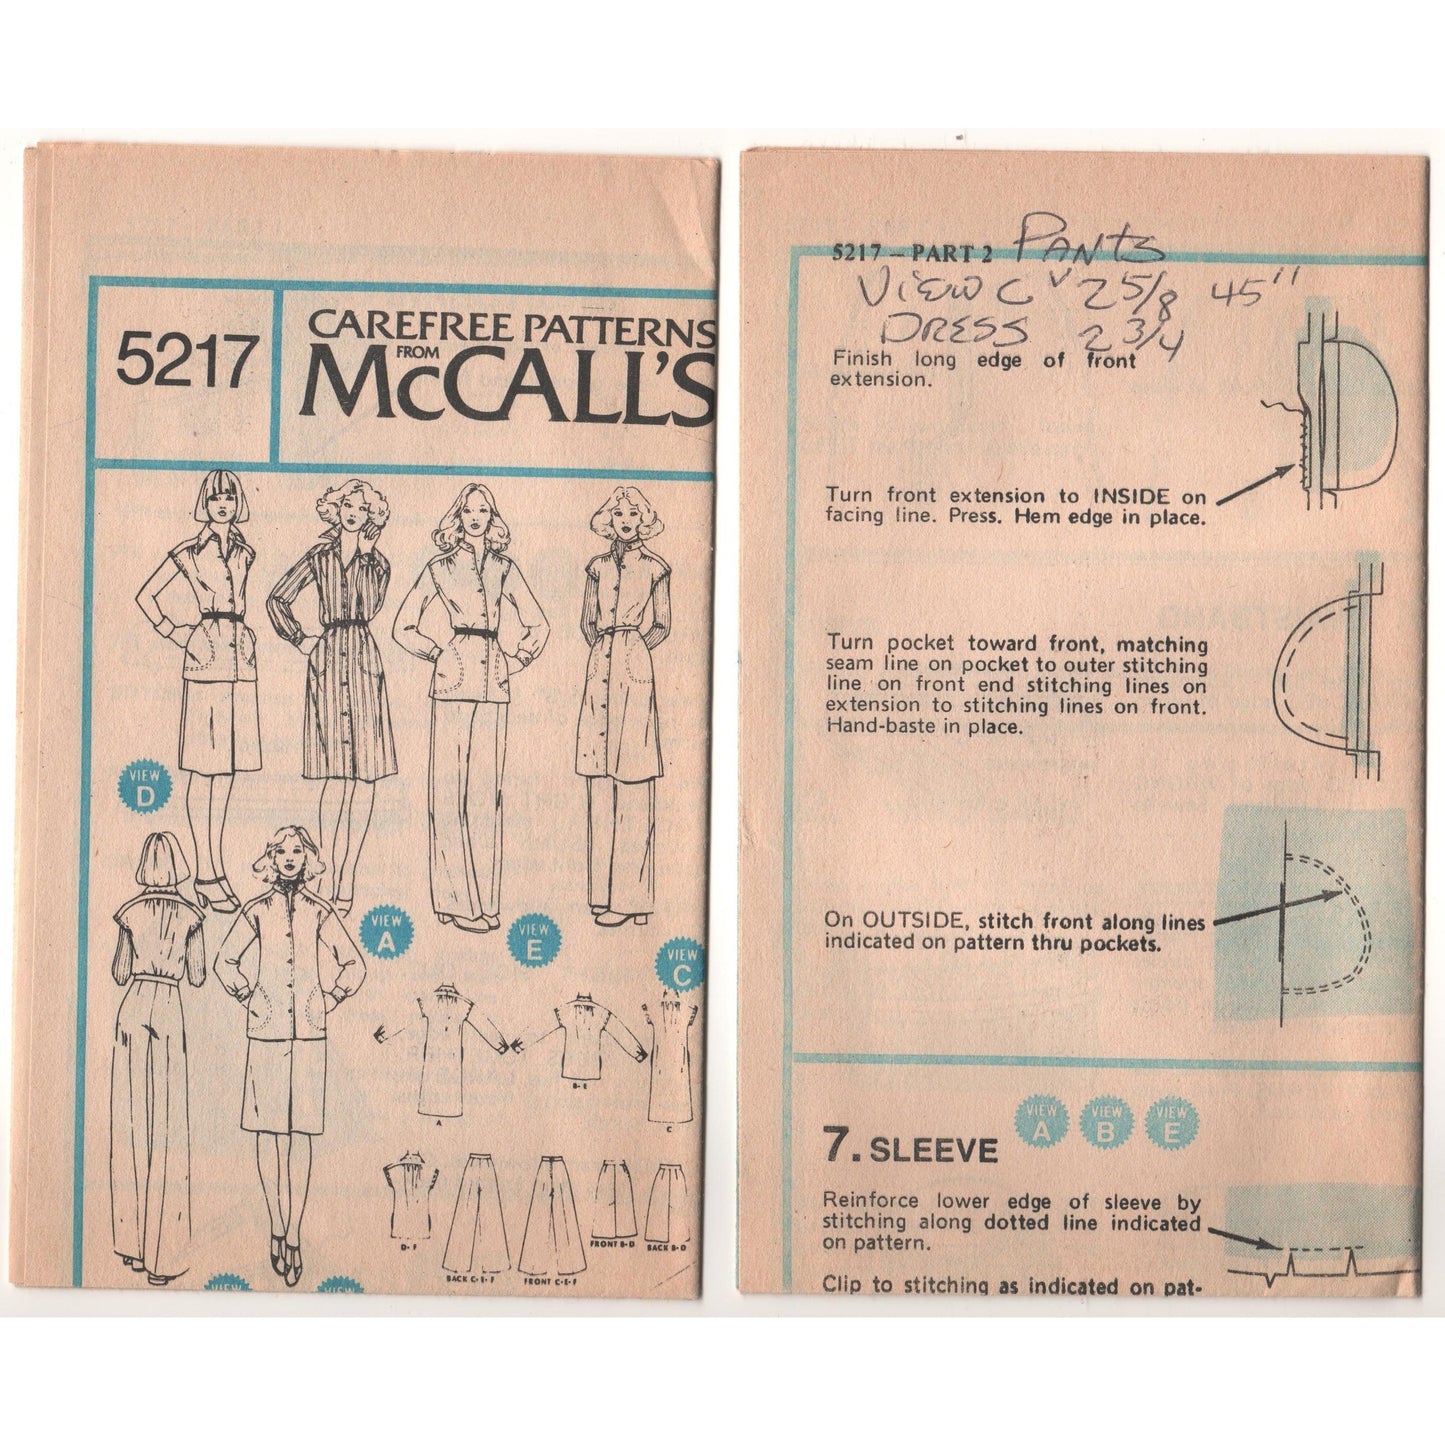 McCalls 5217 Pattern Vintage Misses Dress, Unlined Jacket or top, Skirt and Pants